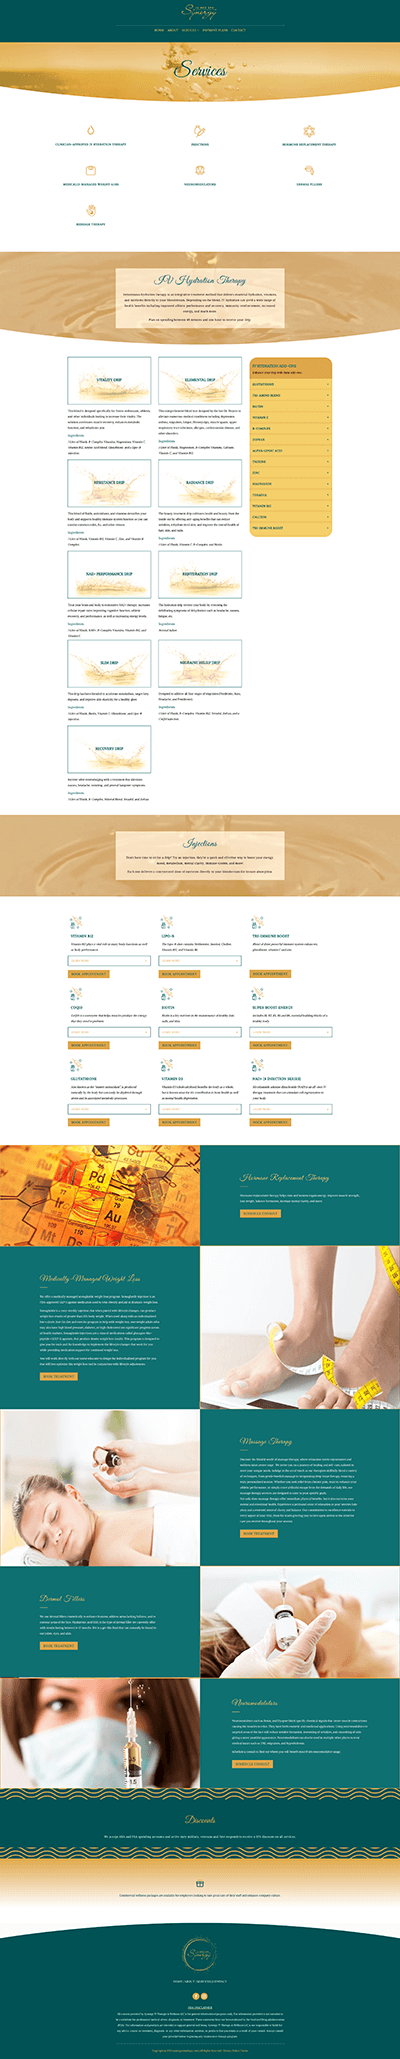 synergy-iv-medspa-services-website-design-sarah-abell-works-llc